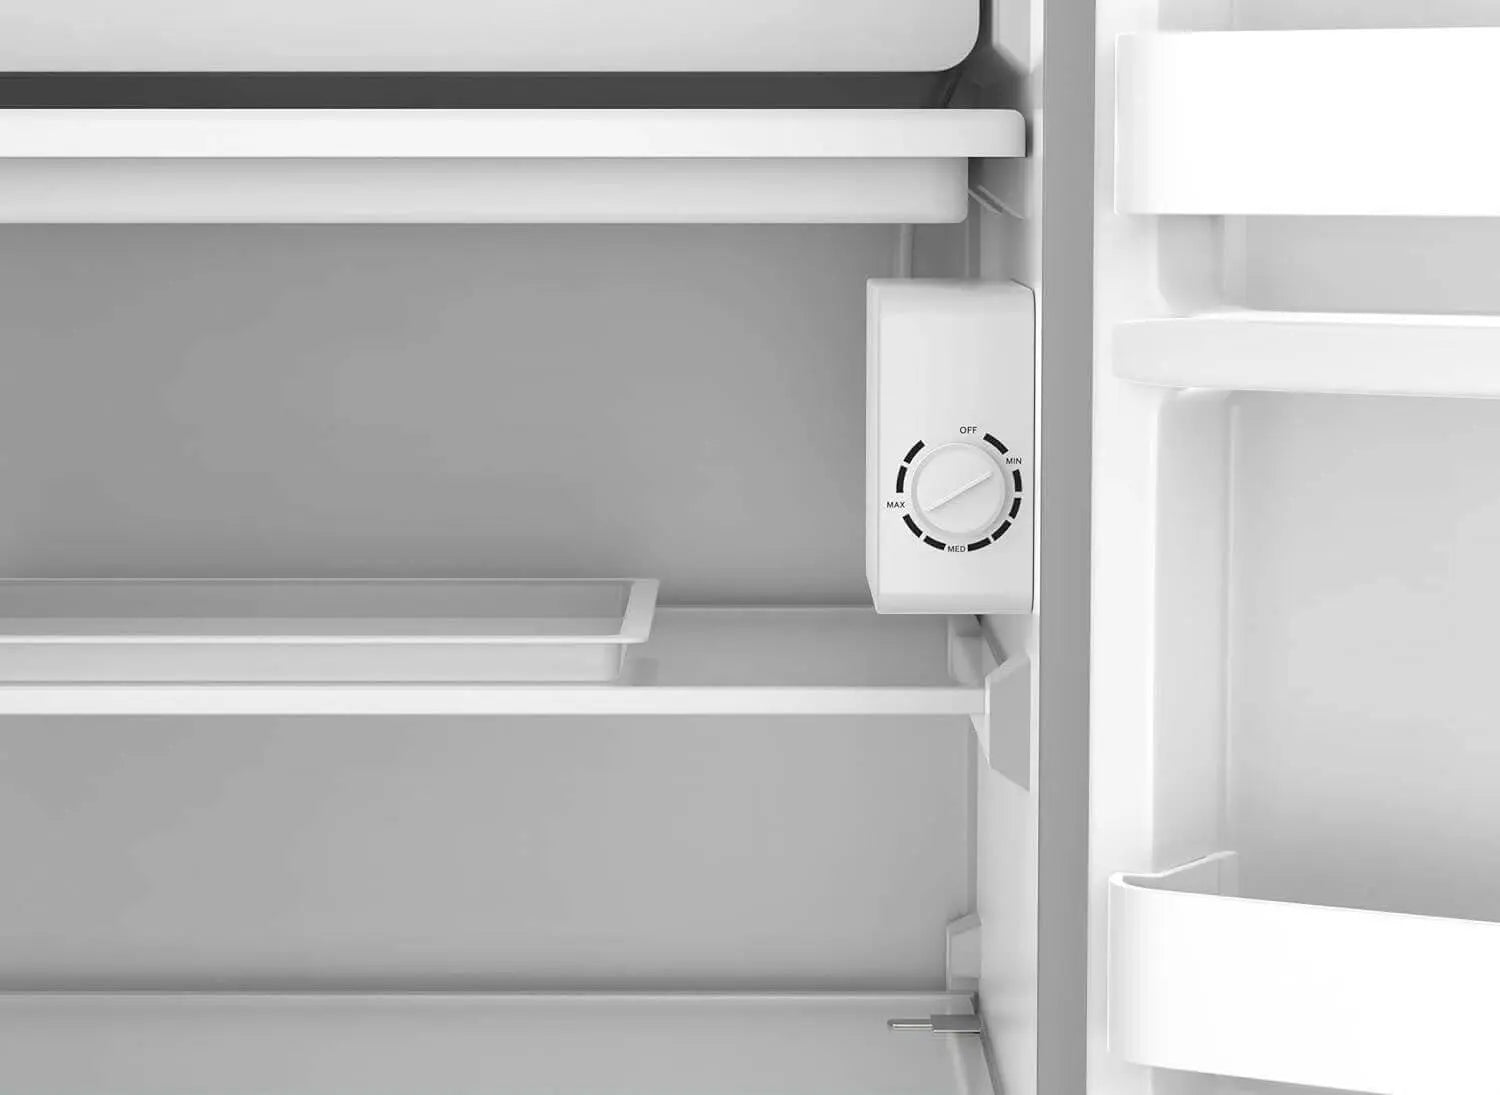 Midea 120L Single Door Refrigerator with Separate Chiller Compartment, 2L Bottle Holder, Adjustable Legs, 5 Year Compressor Warranty